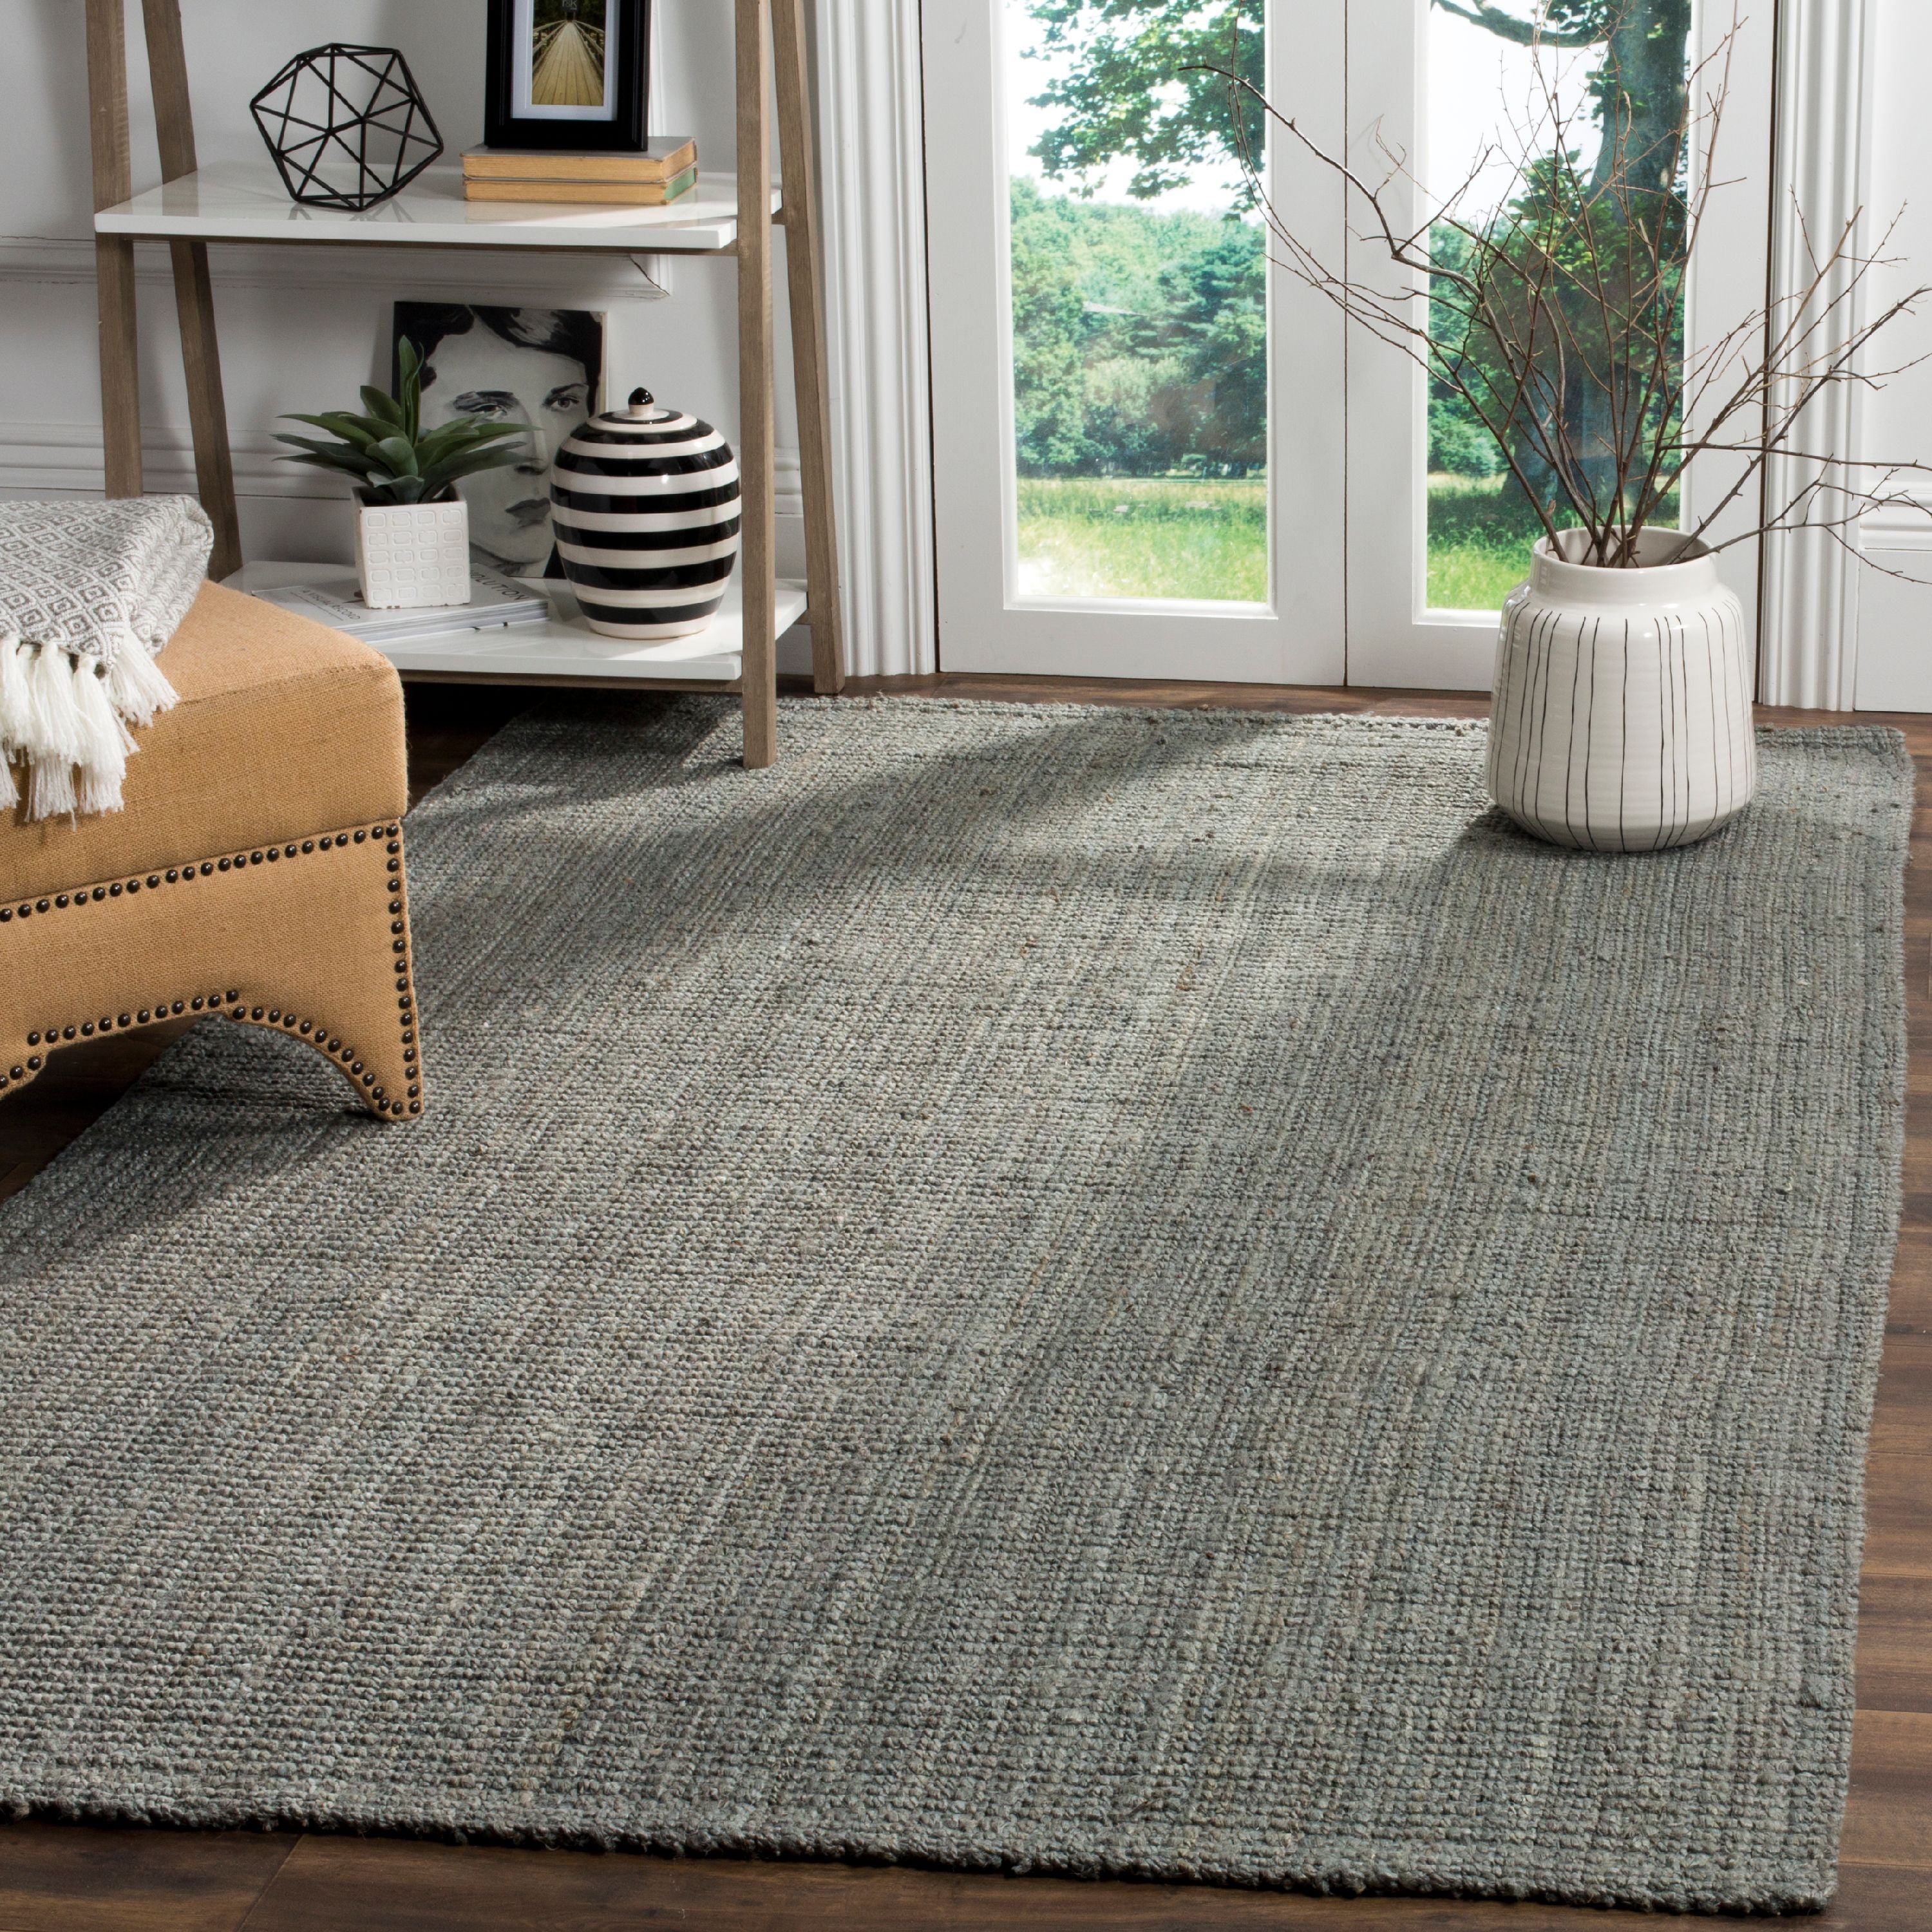 Dhurrie Area Floor Carpet Rug Natural Jute Braided Rectangle 6X9 Feet Rag Rugs 